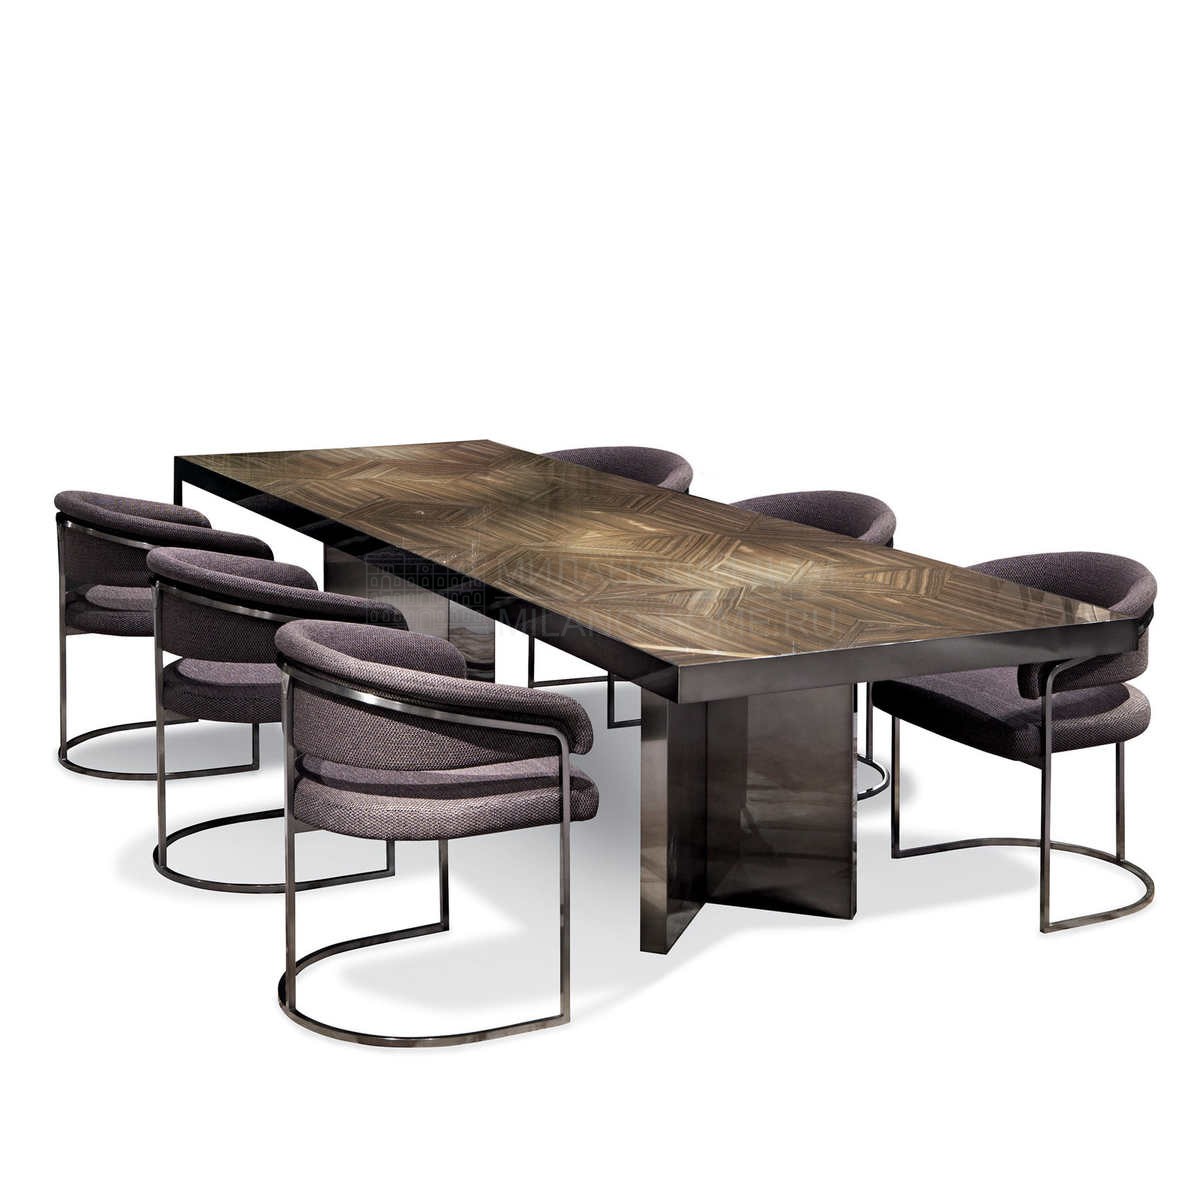 Обеденный стол Revenge dining table из Италии фабрики IPE CAVALLI VISIONNAIRE